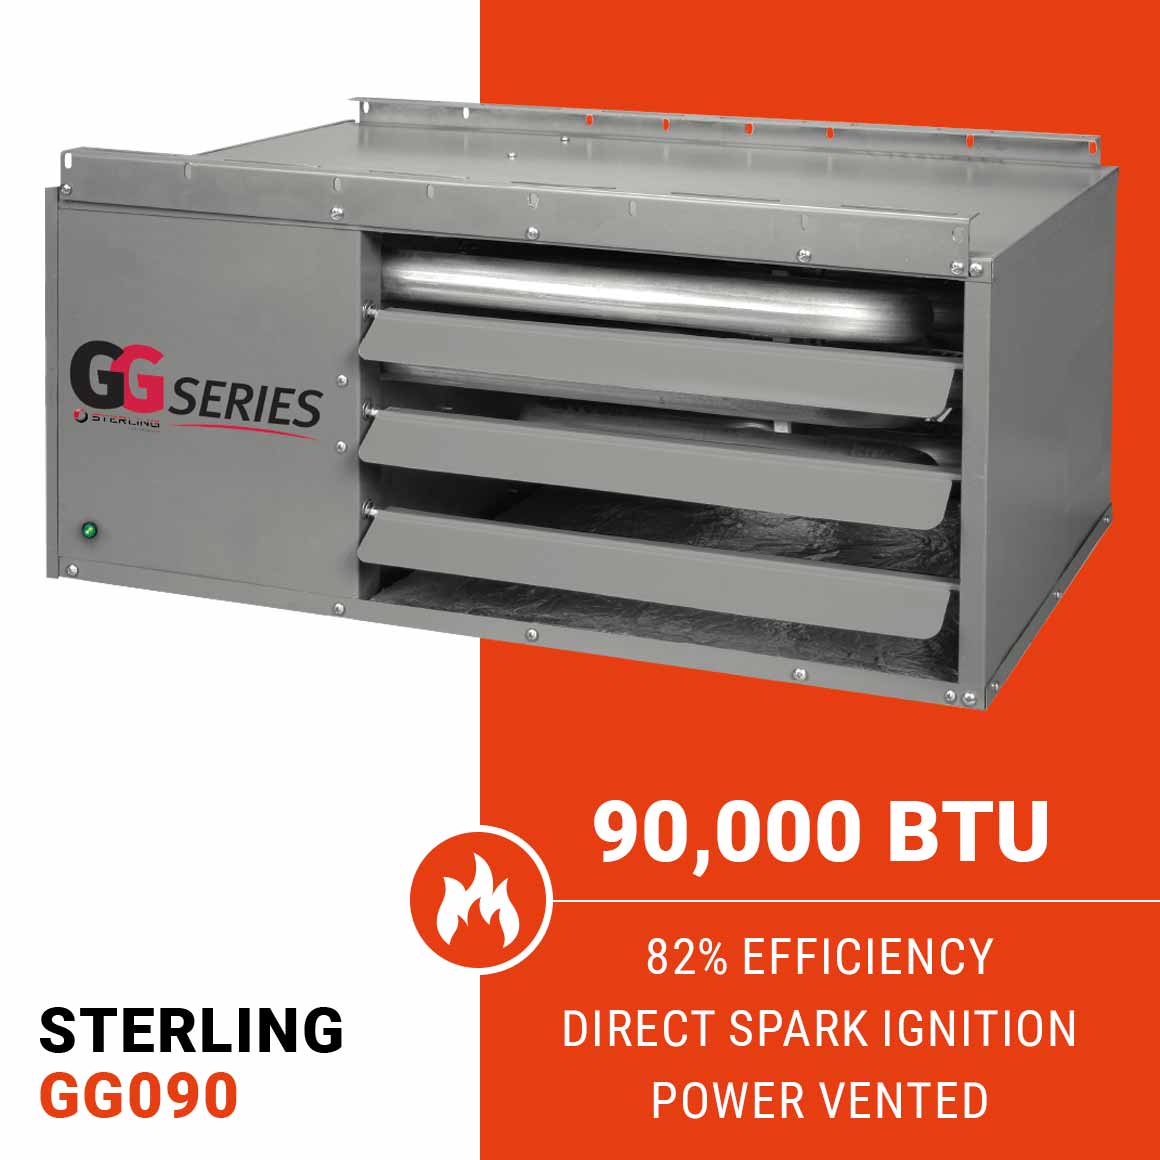 Sterling GG090 Garage Heater